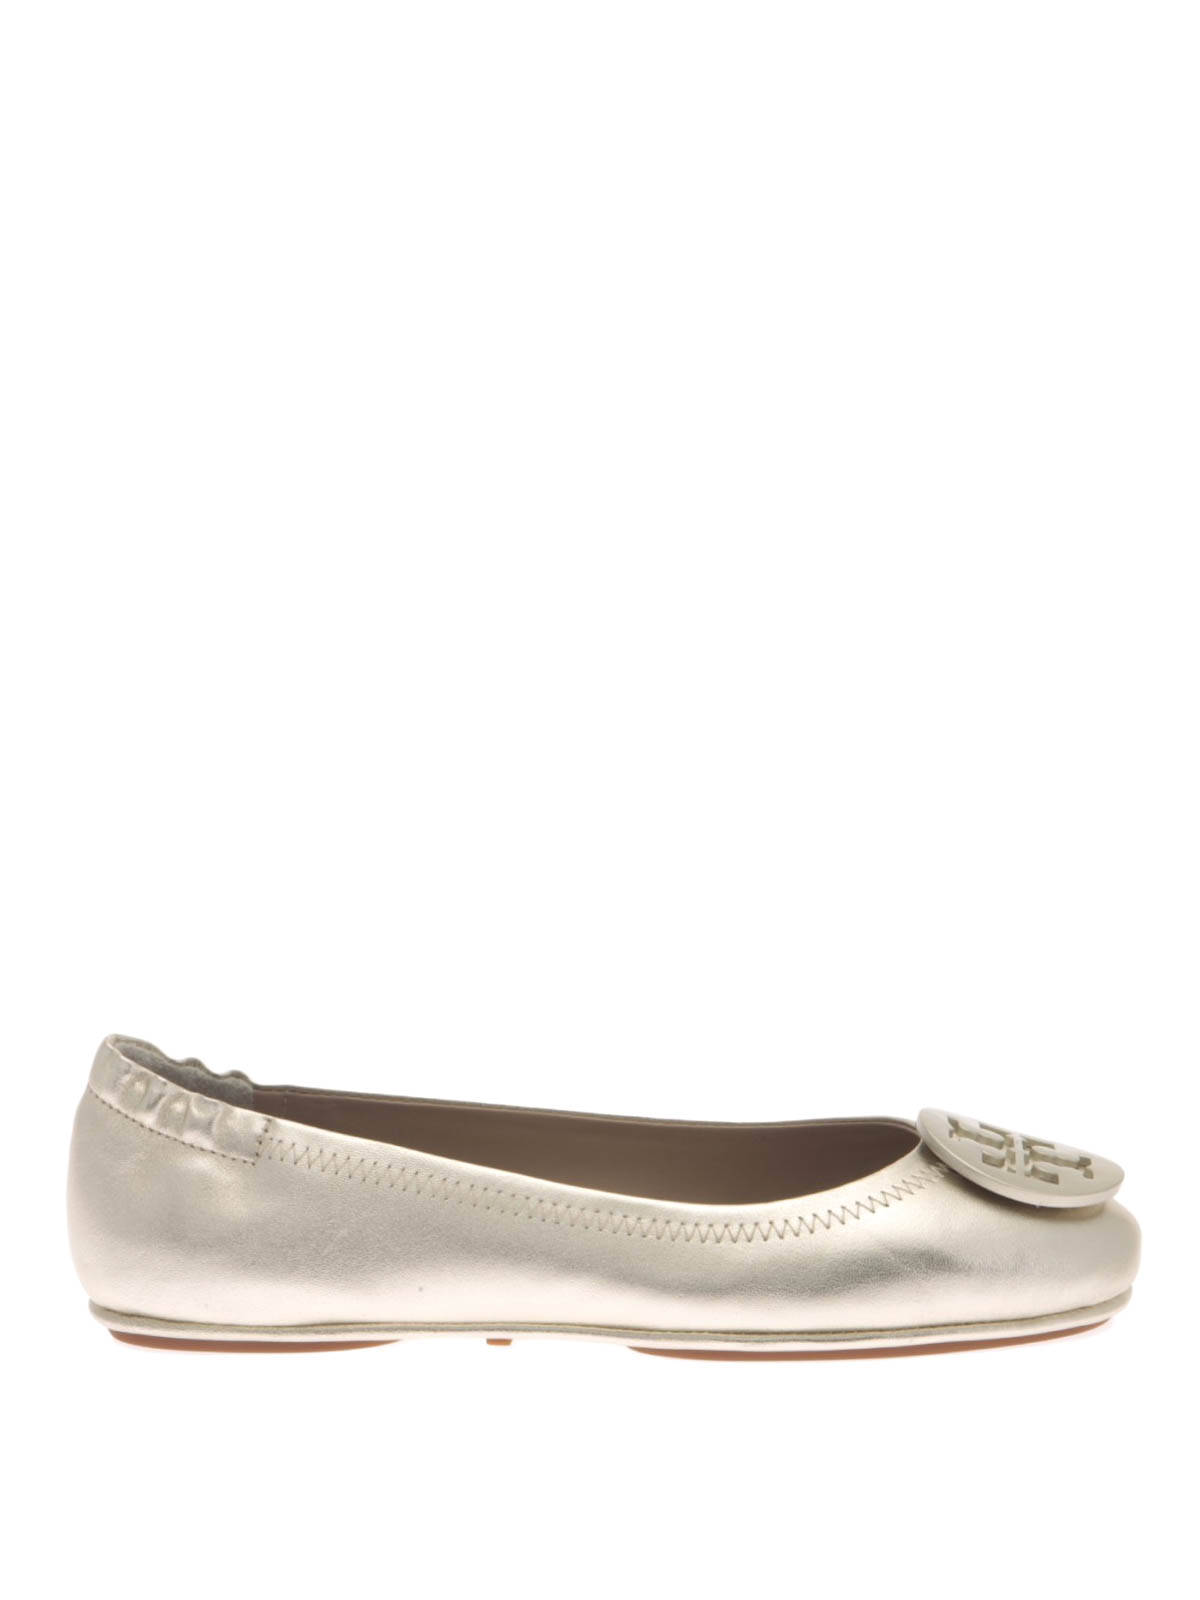 Flat shoes Tory Burch - Minnie folding metallic flats - 11168235700